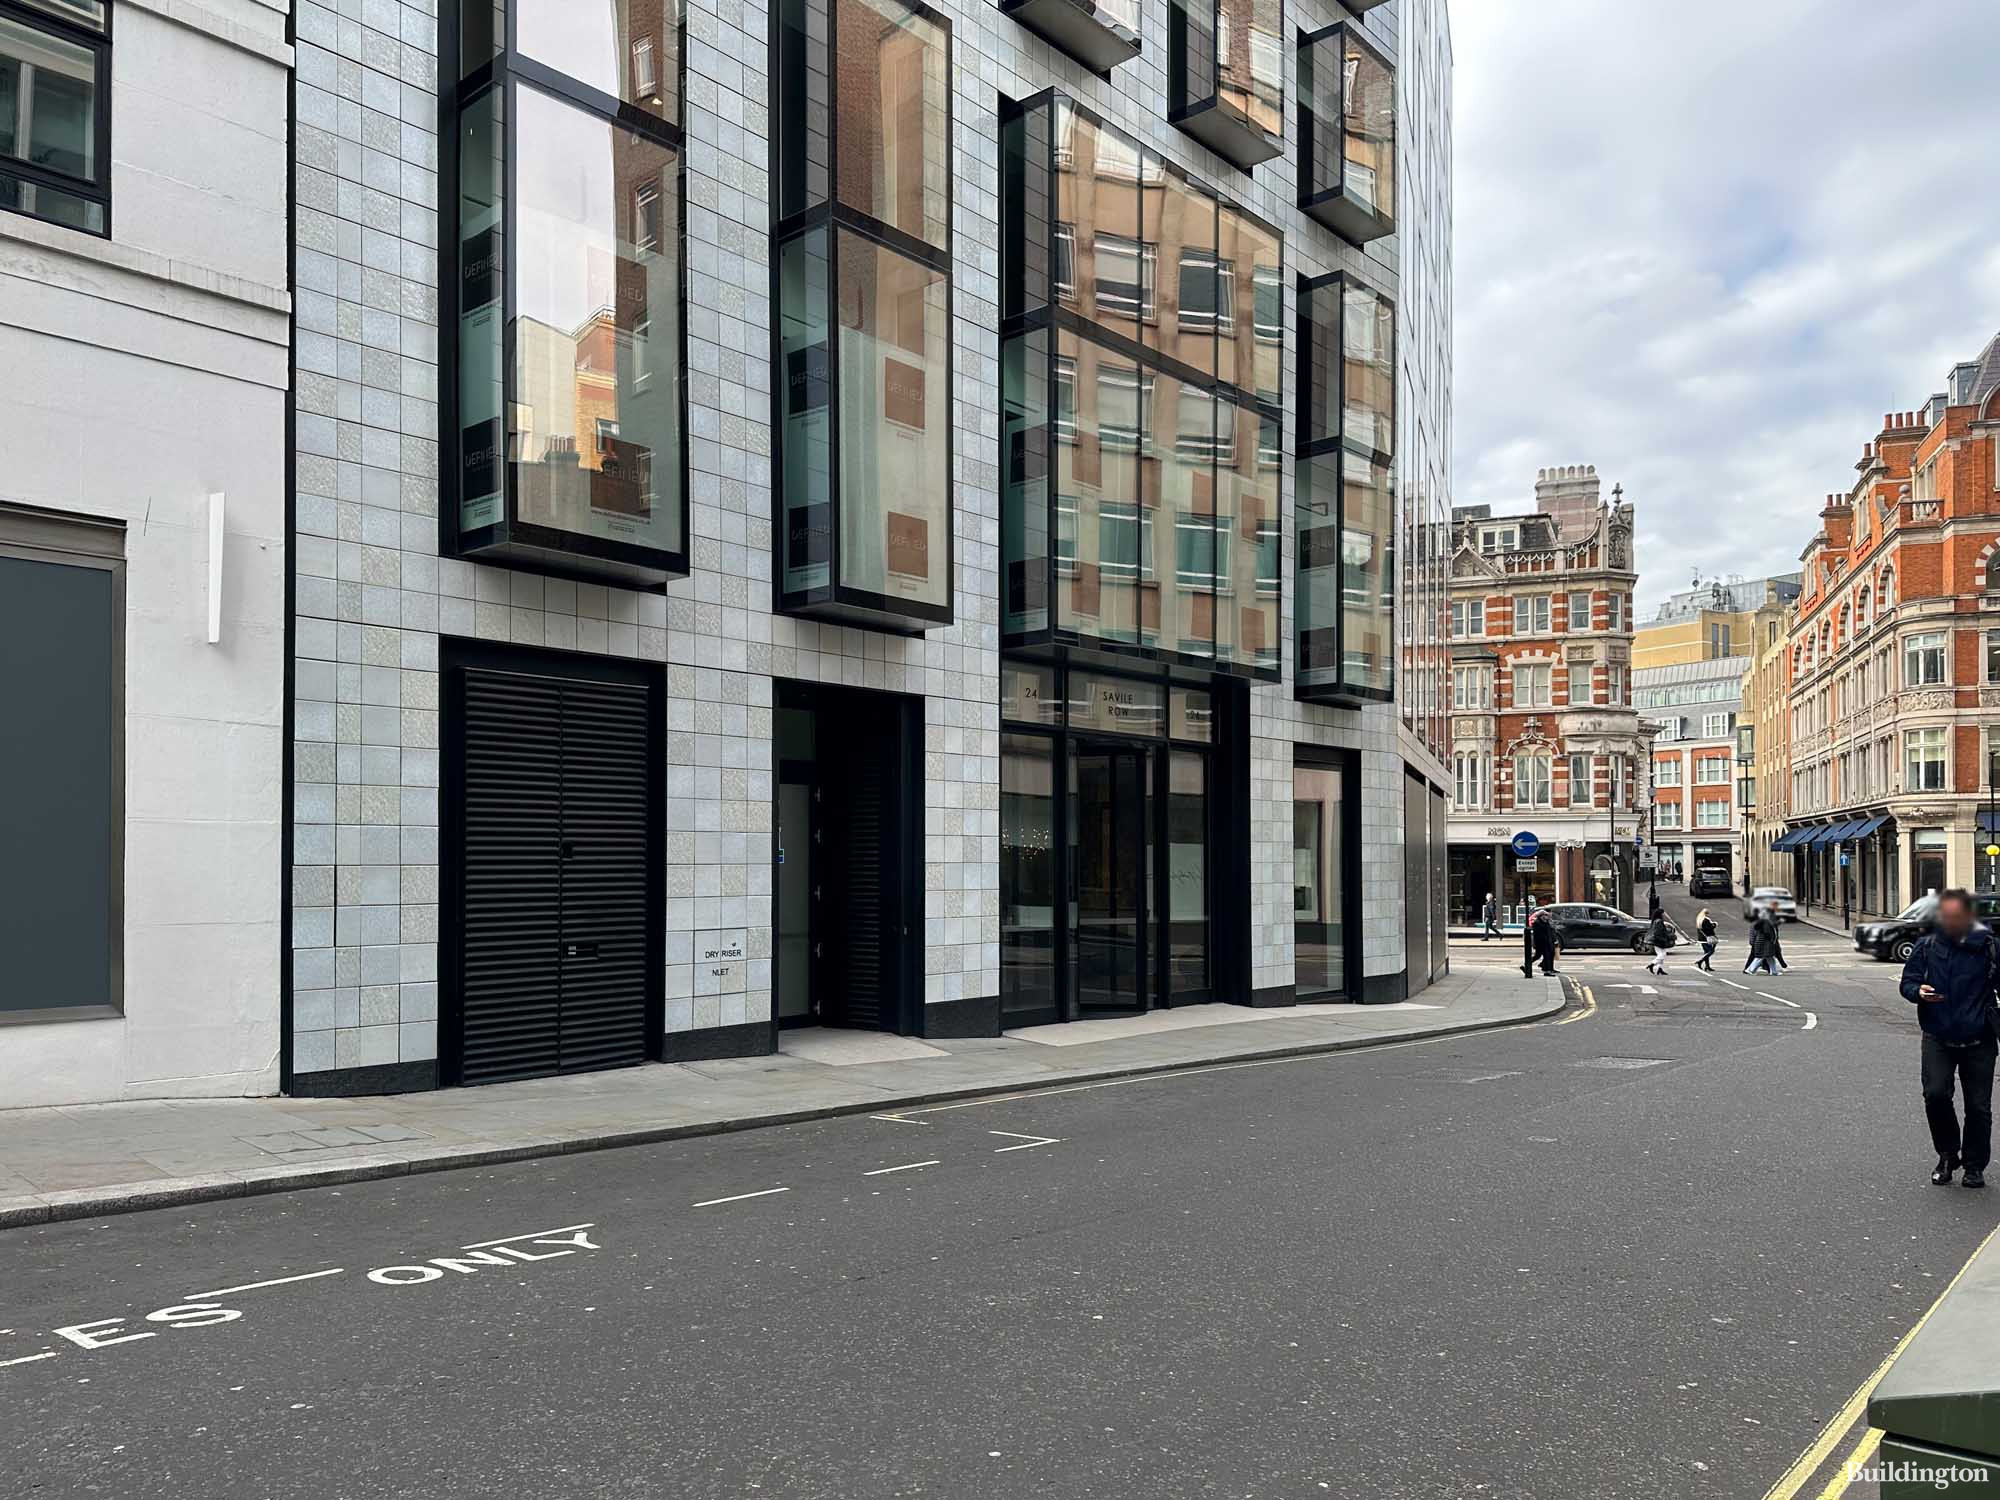 View from Savile Row to Conduit Street next to 49-51 Conduit Street/24 Savile Row building in Mayfair, London W1.